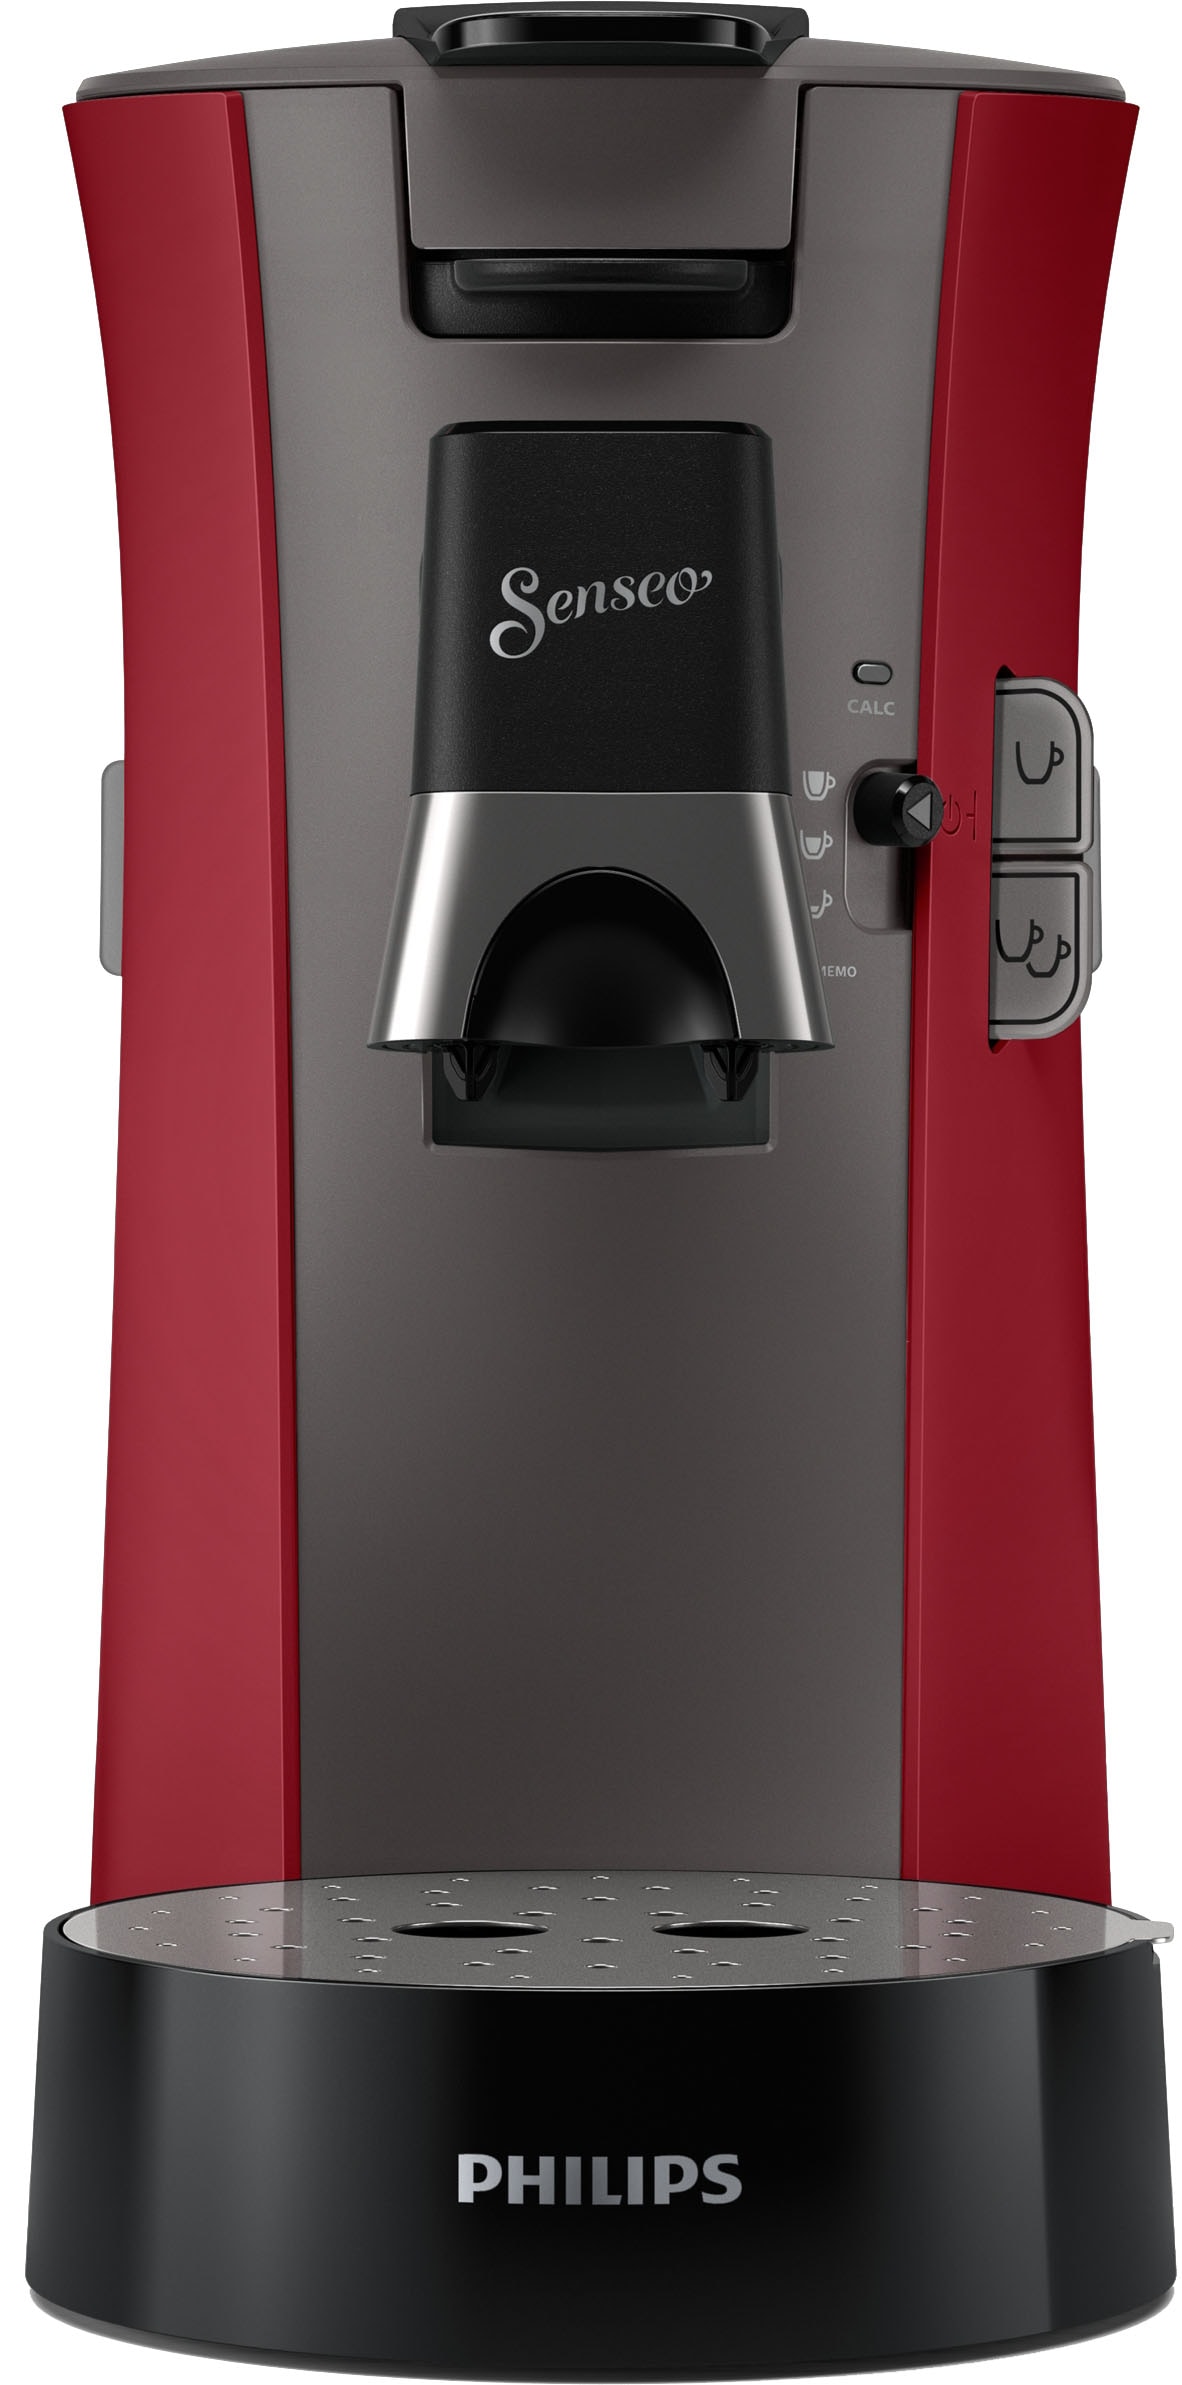 Philips Senseo Kaffeepadmaschine »Select CSA240/90«, aus 21% recyceltem Plastik und mit 3 Kaffeespezialitäten, dunkelrot